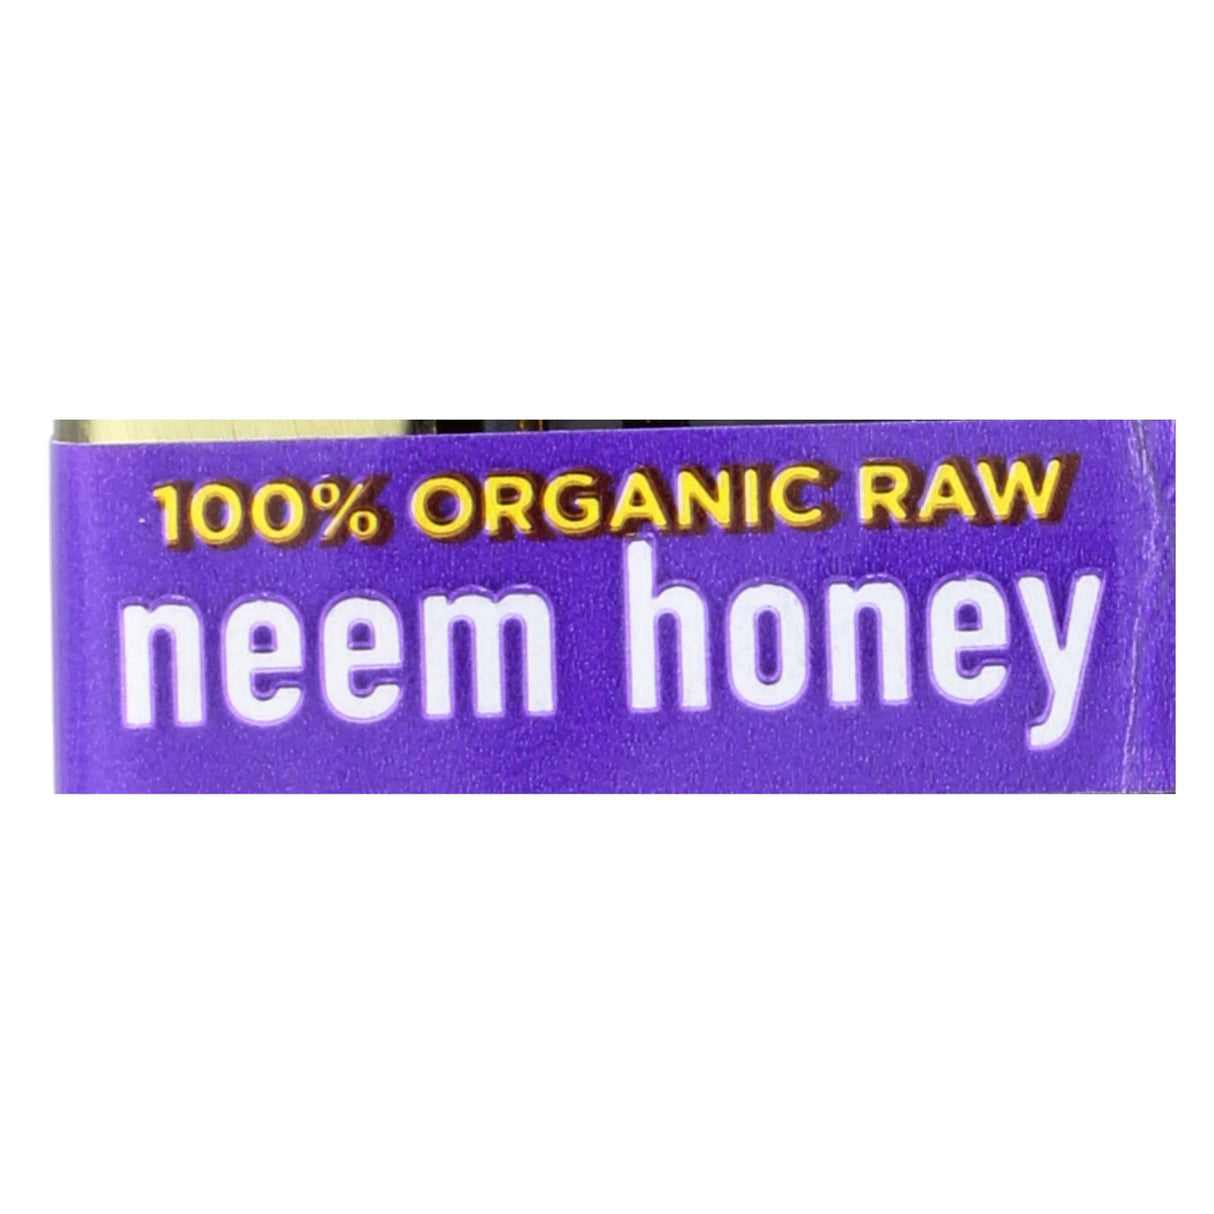 Heavenly Organics Organic Honey - Wild Forest - Case Of 6 - 12 Oz.